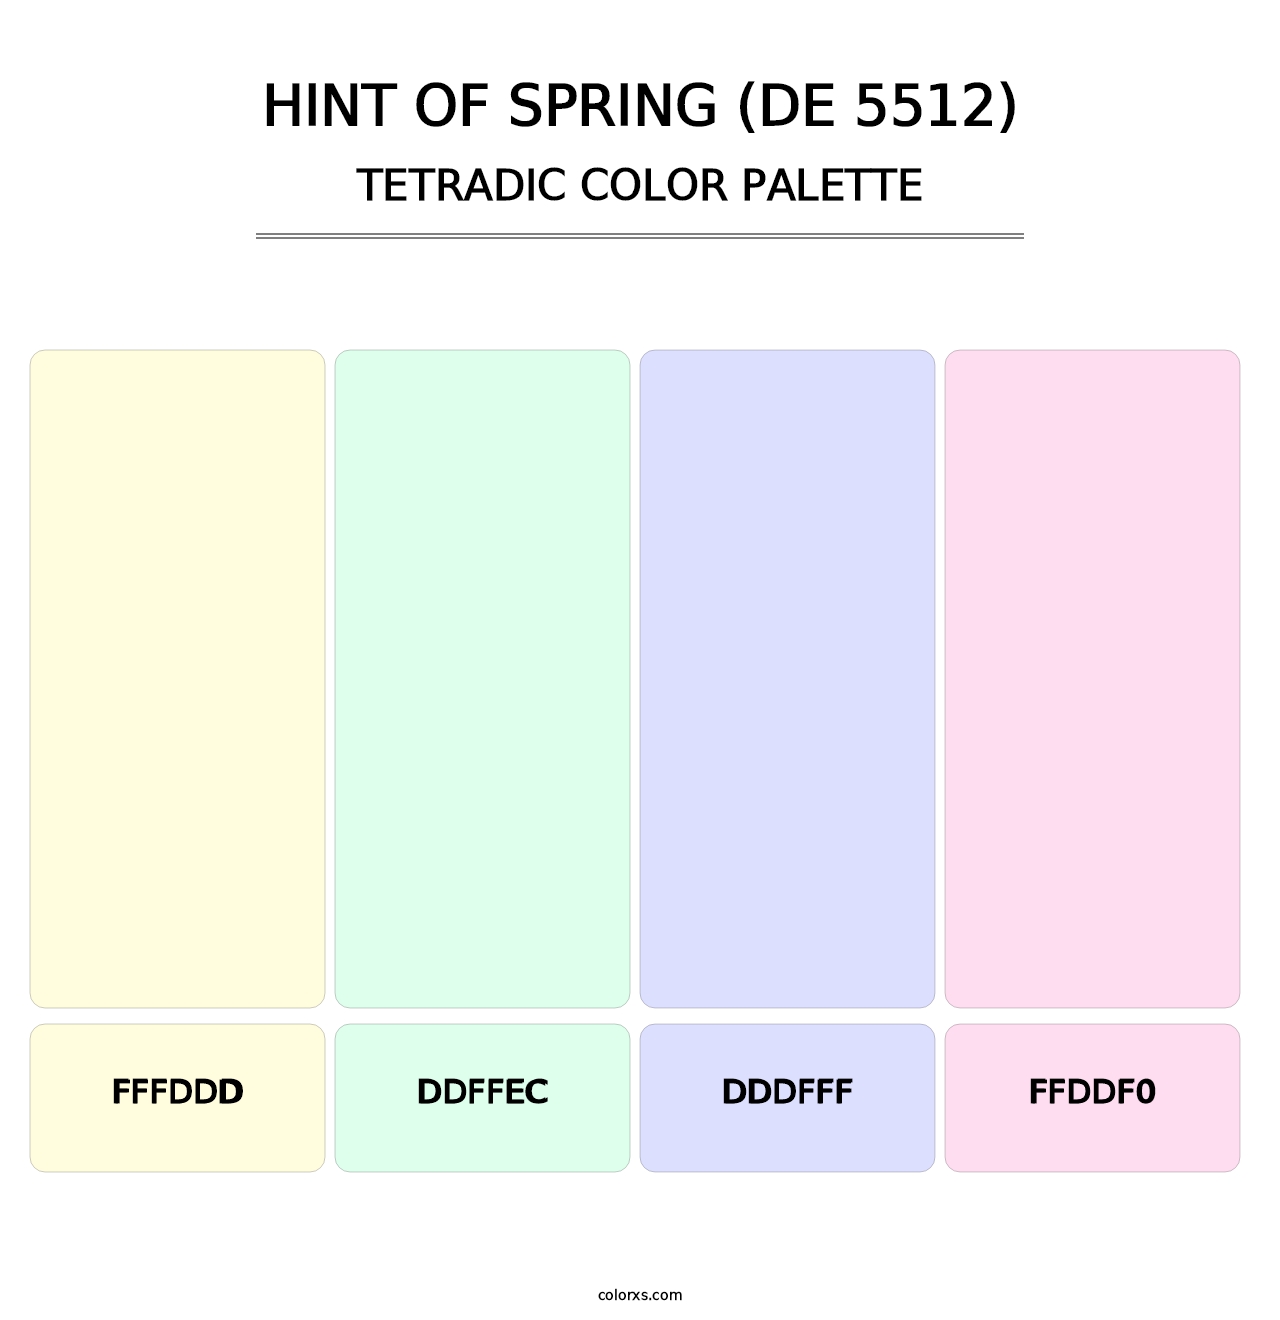 Hint of Spring (DE 5512) - Tetradic Color Palette